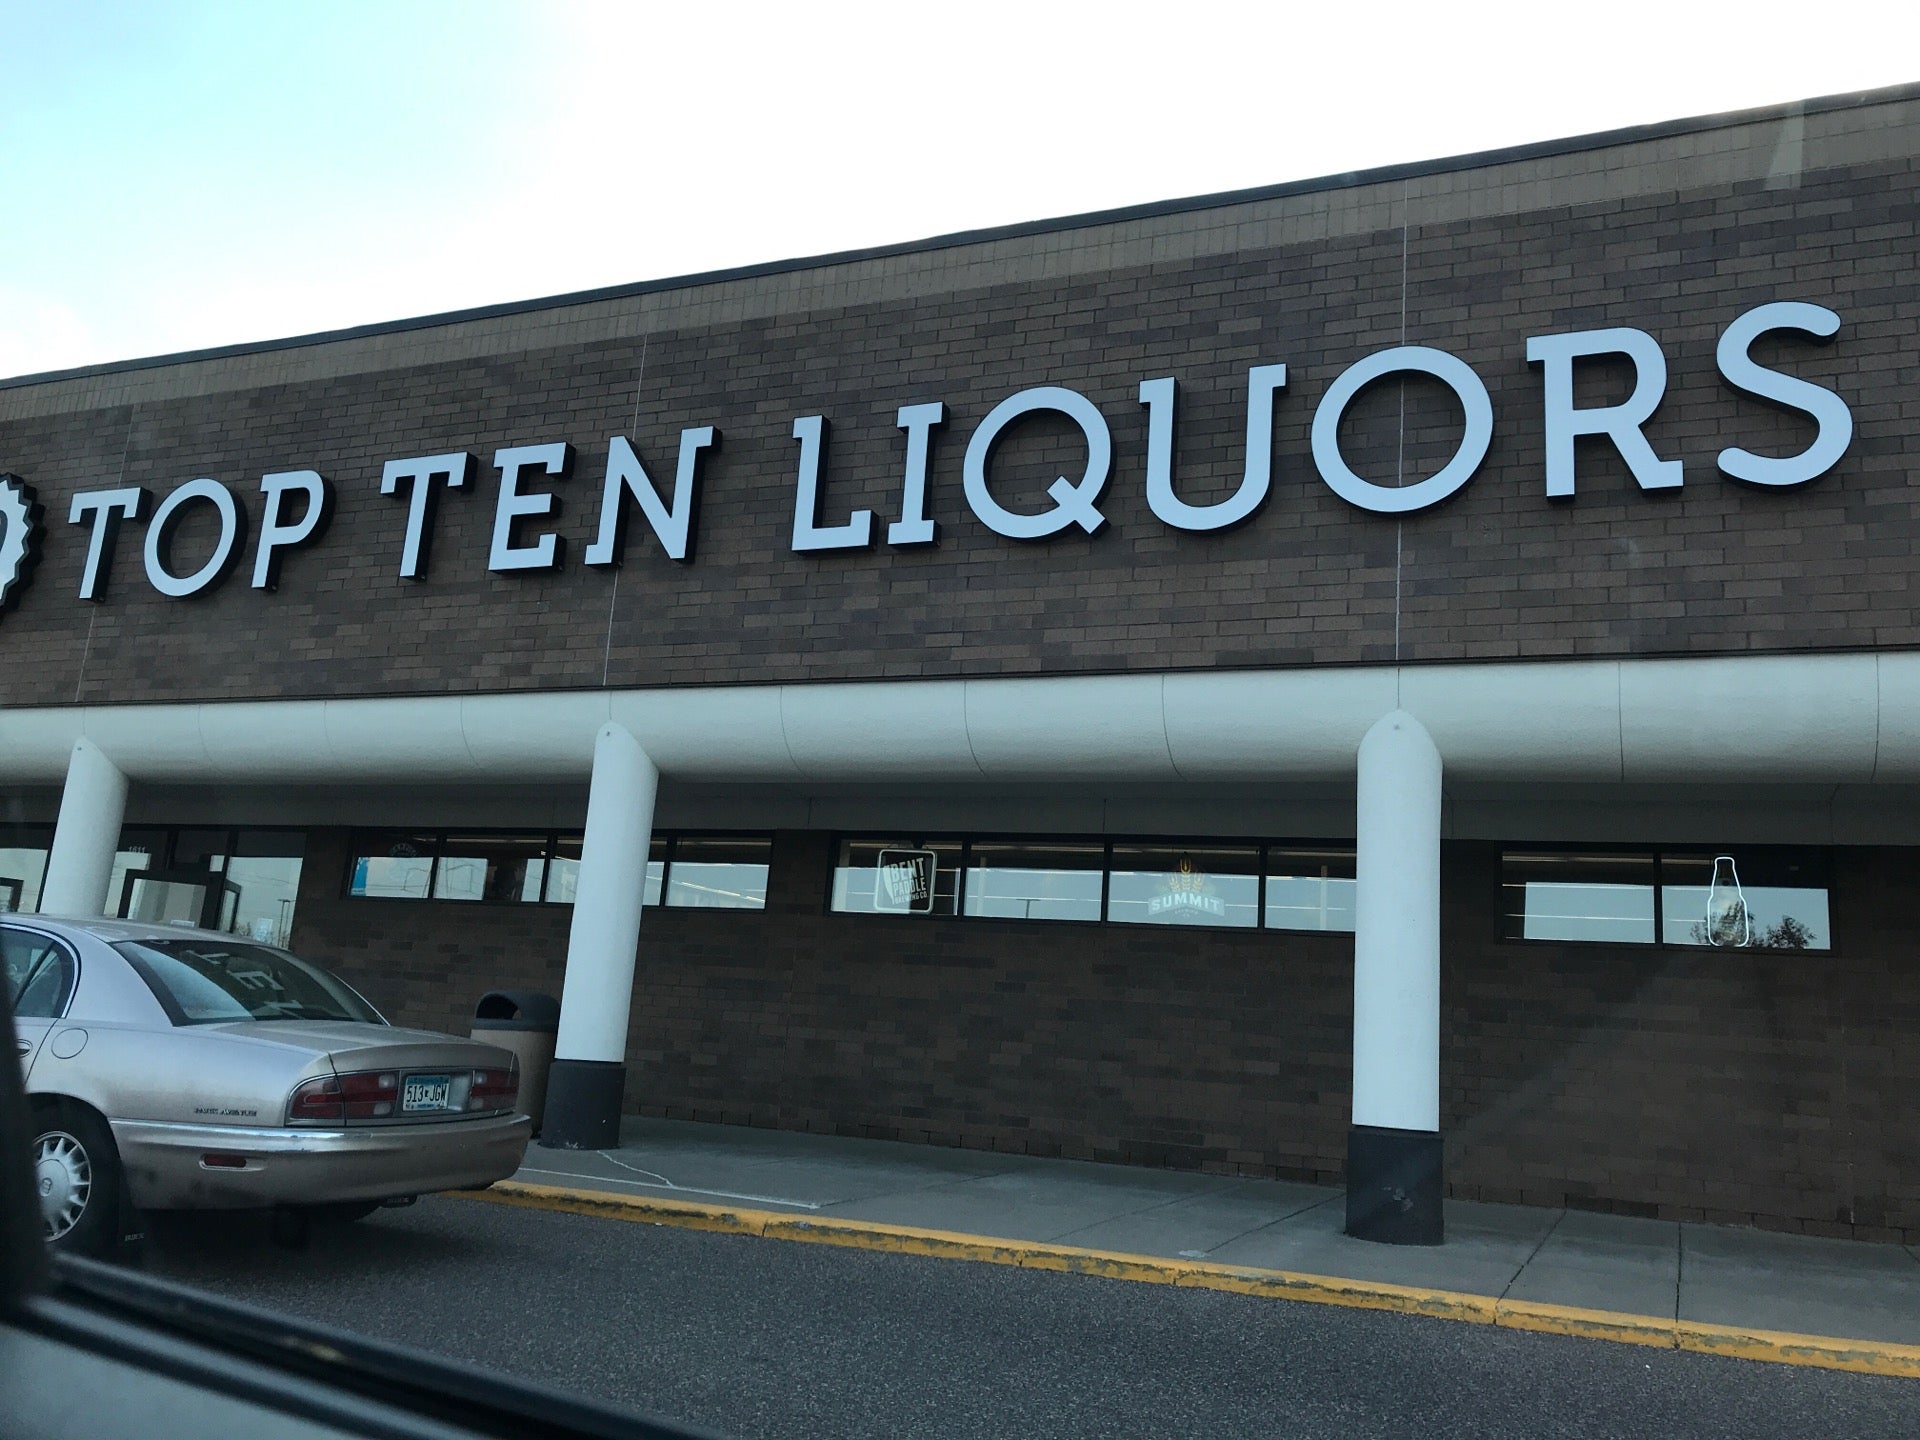 Top Ten Liquors, Minneapolis MN